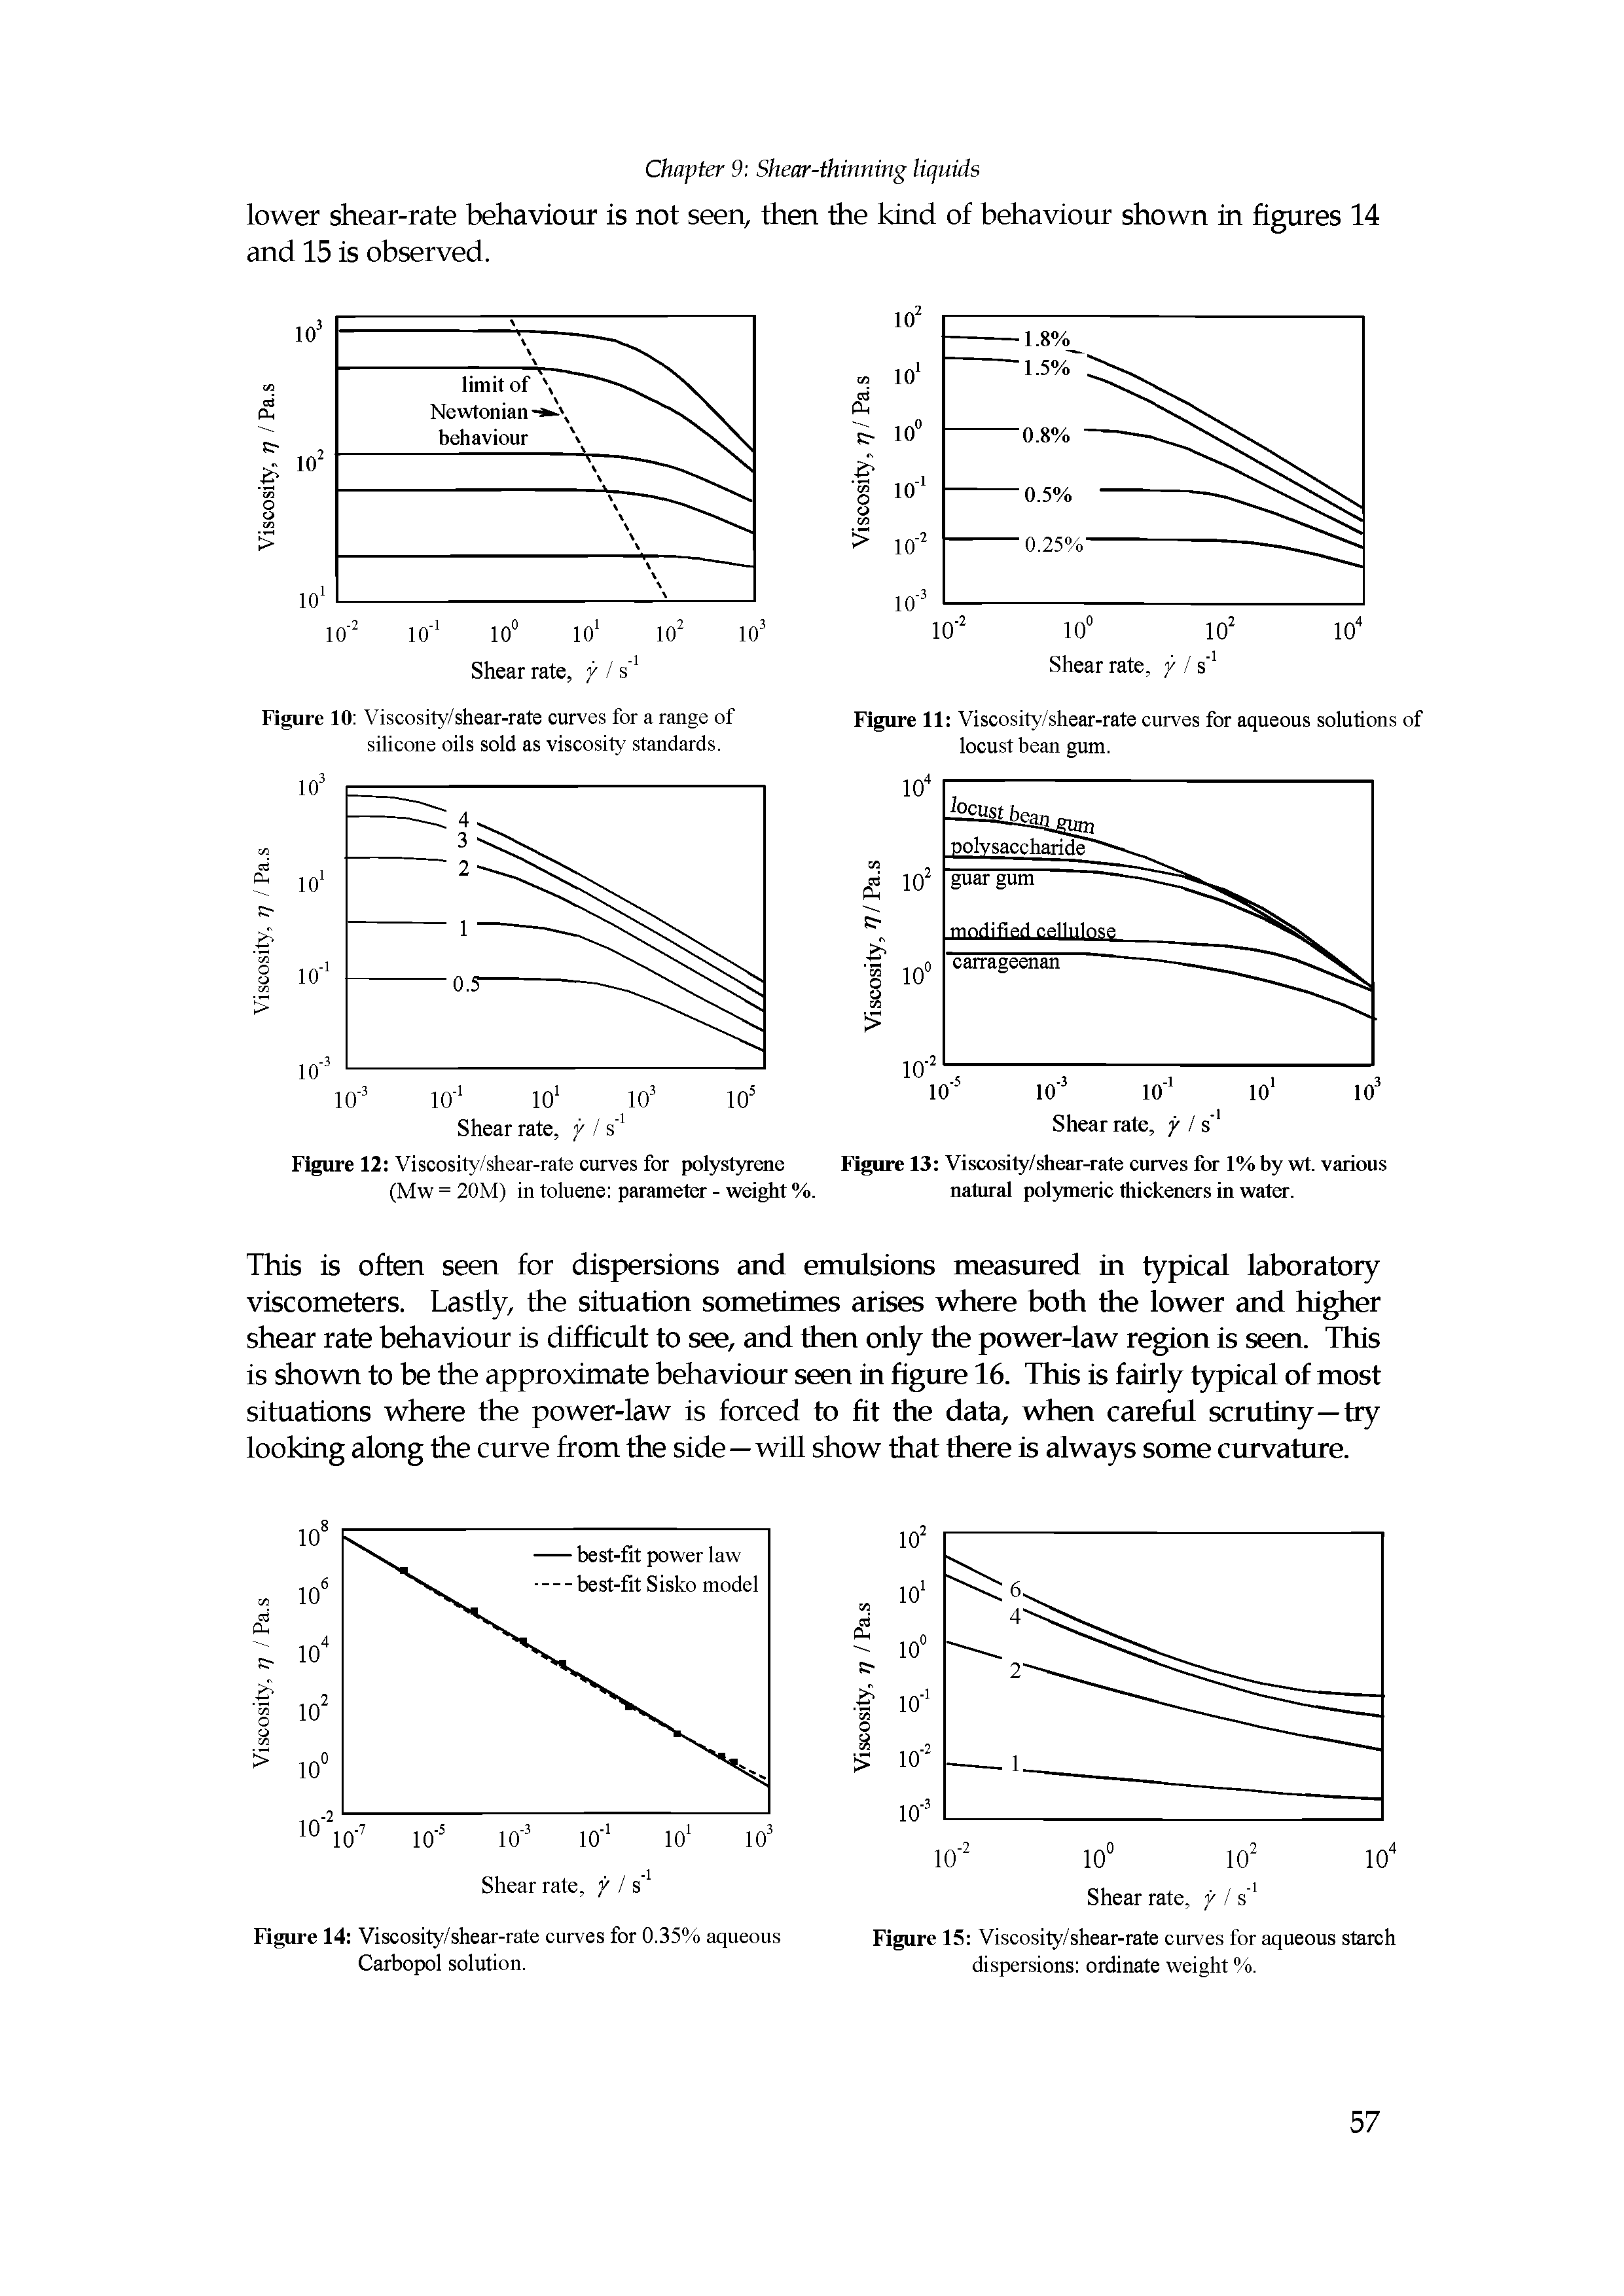 Figure 14 Viscosity/shear-rate curves for 0.35% aqueous Carbopol solution.